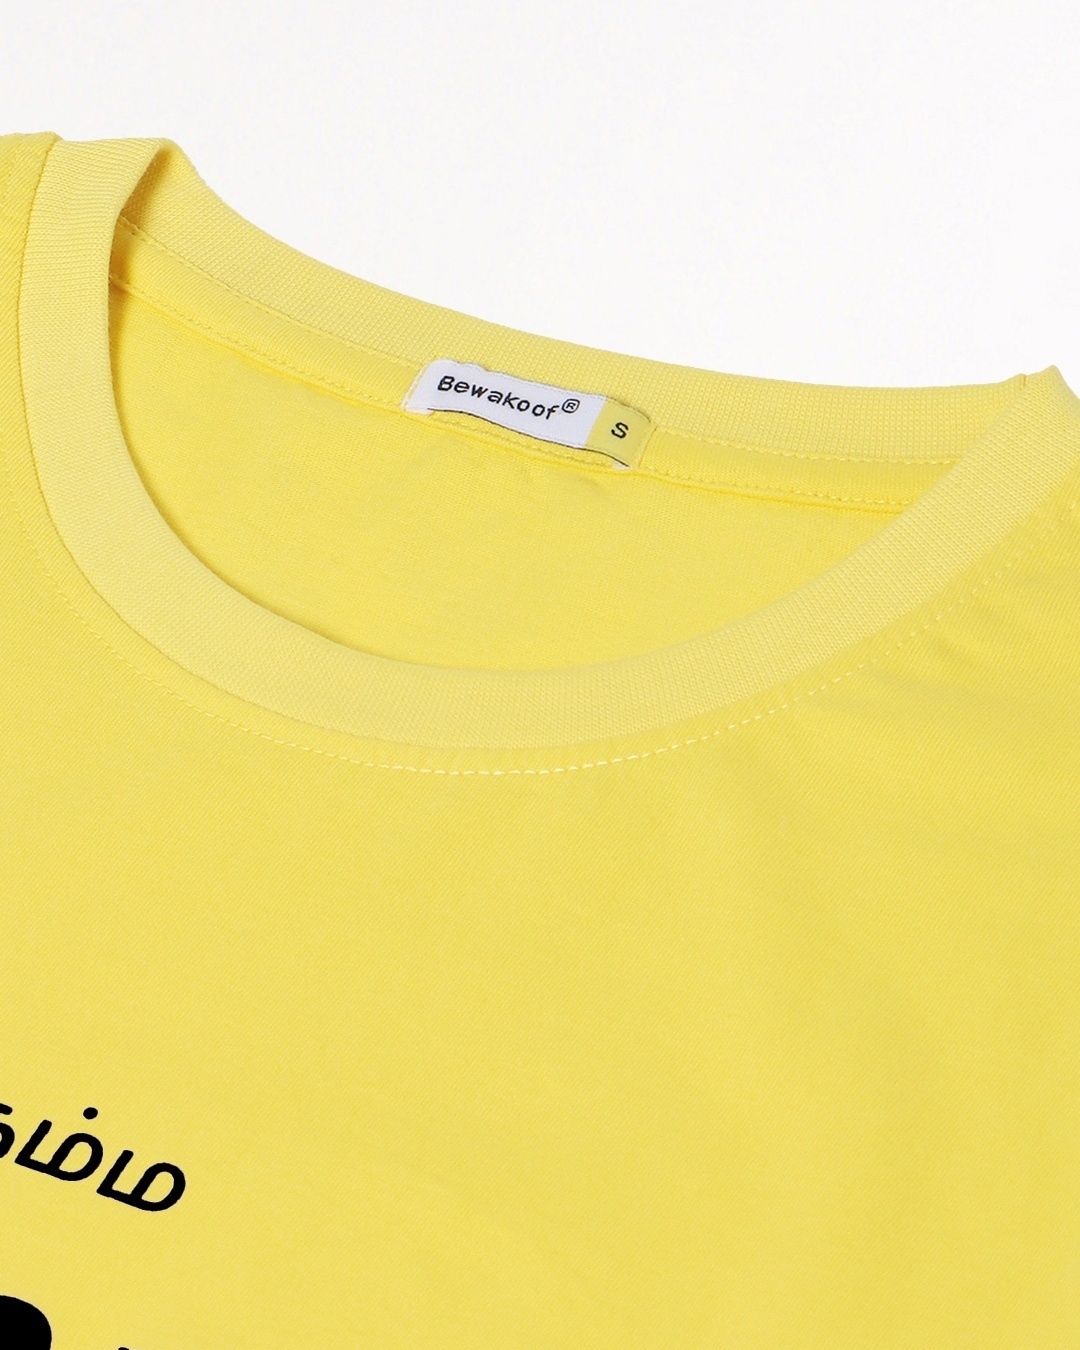 Shop Women's Yellow Chennai City Boyfriend Typography T-shirt